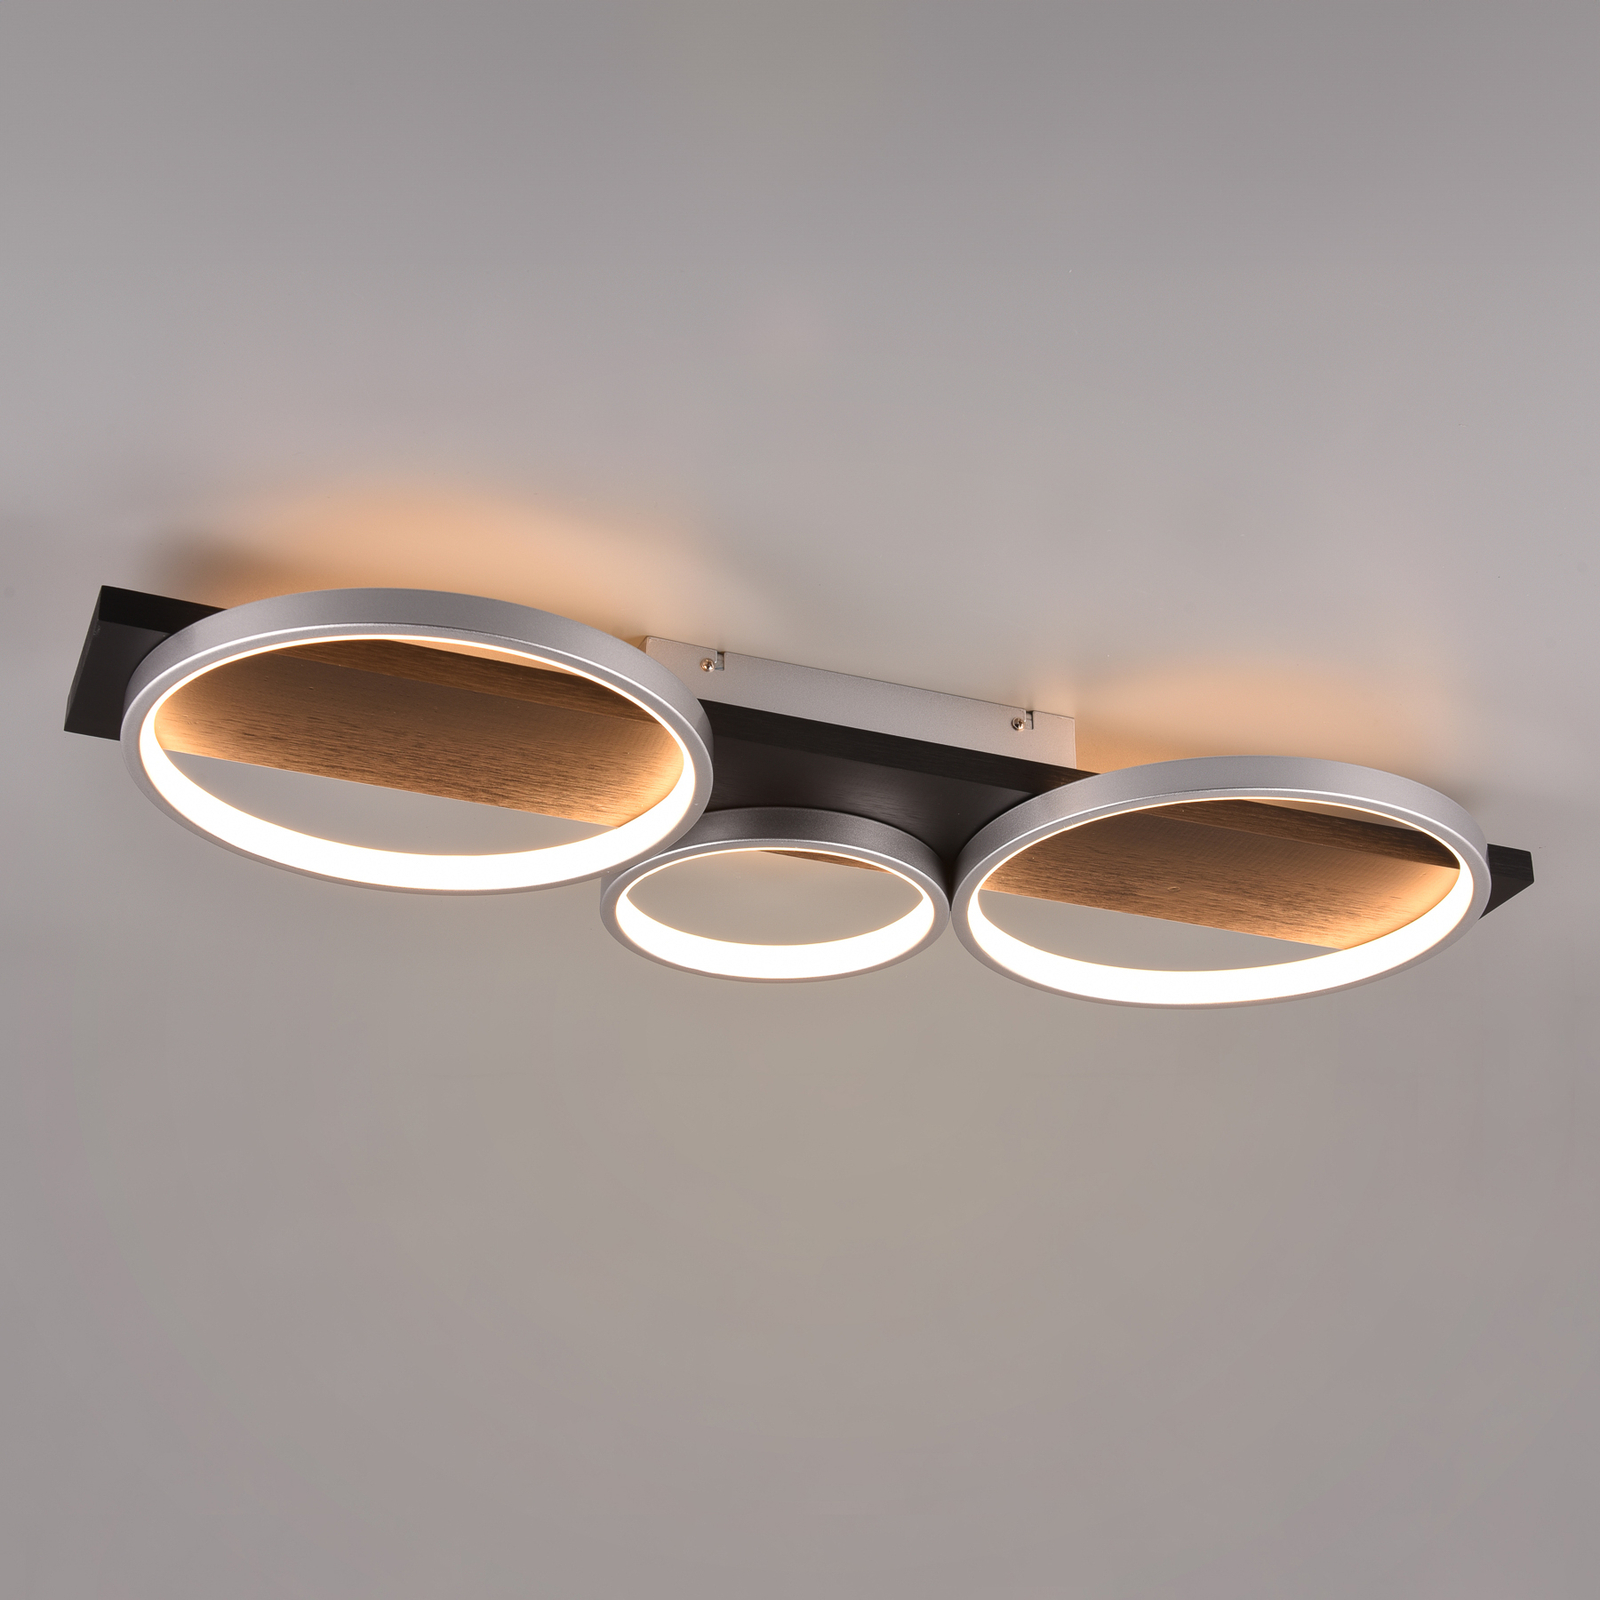 Medera LED ceiling light, 3-bulb, titanium